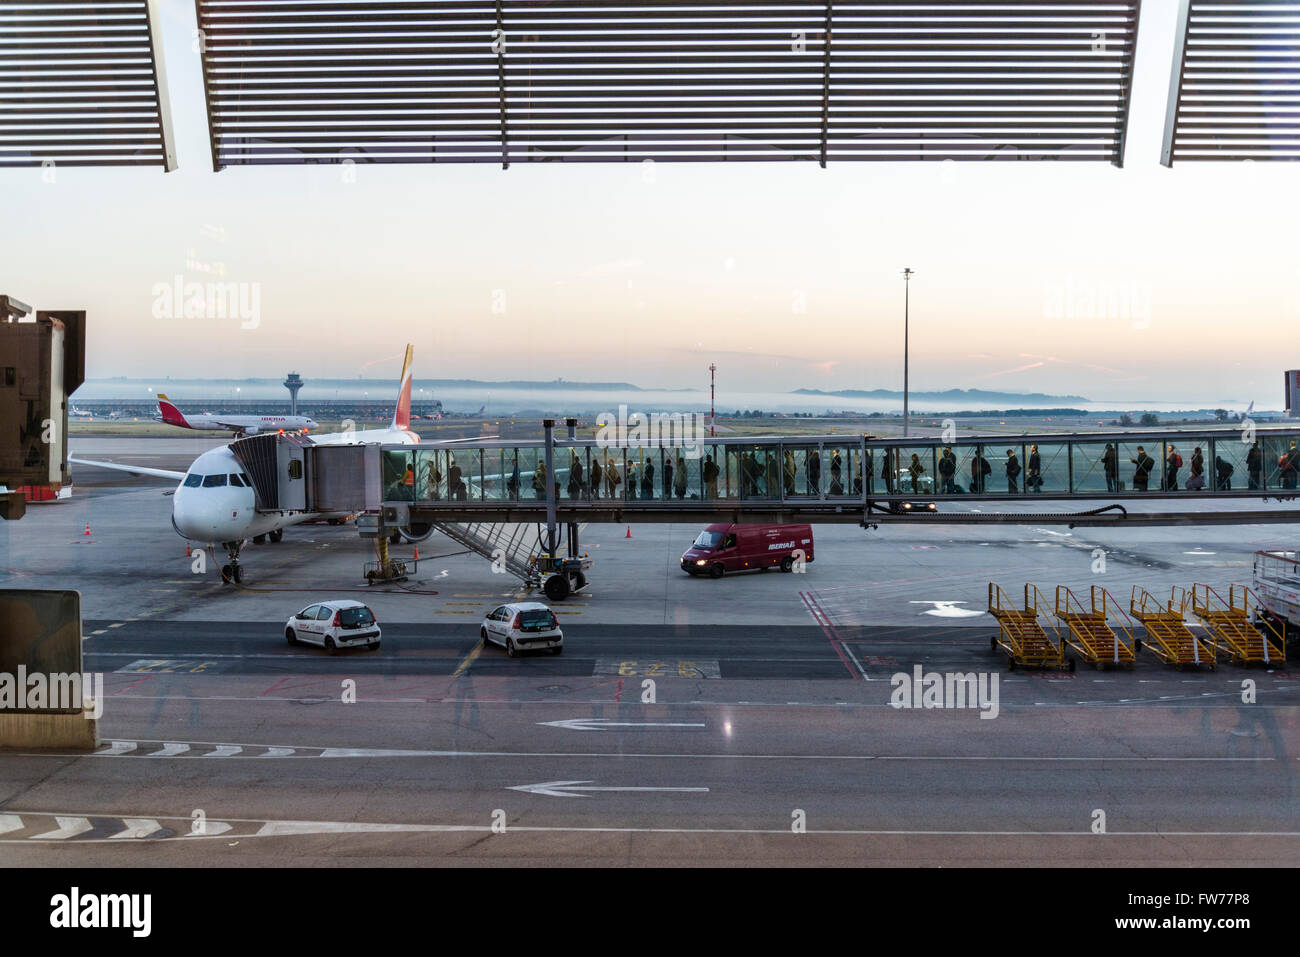 People boarding plane, Barajas Airport, Madrid, Spain Stock Photo